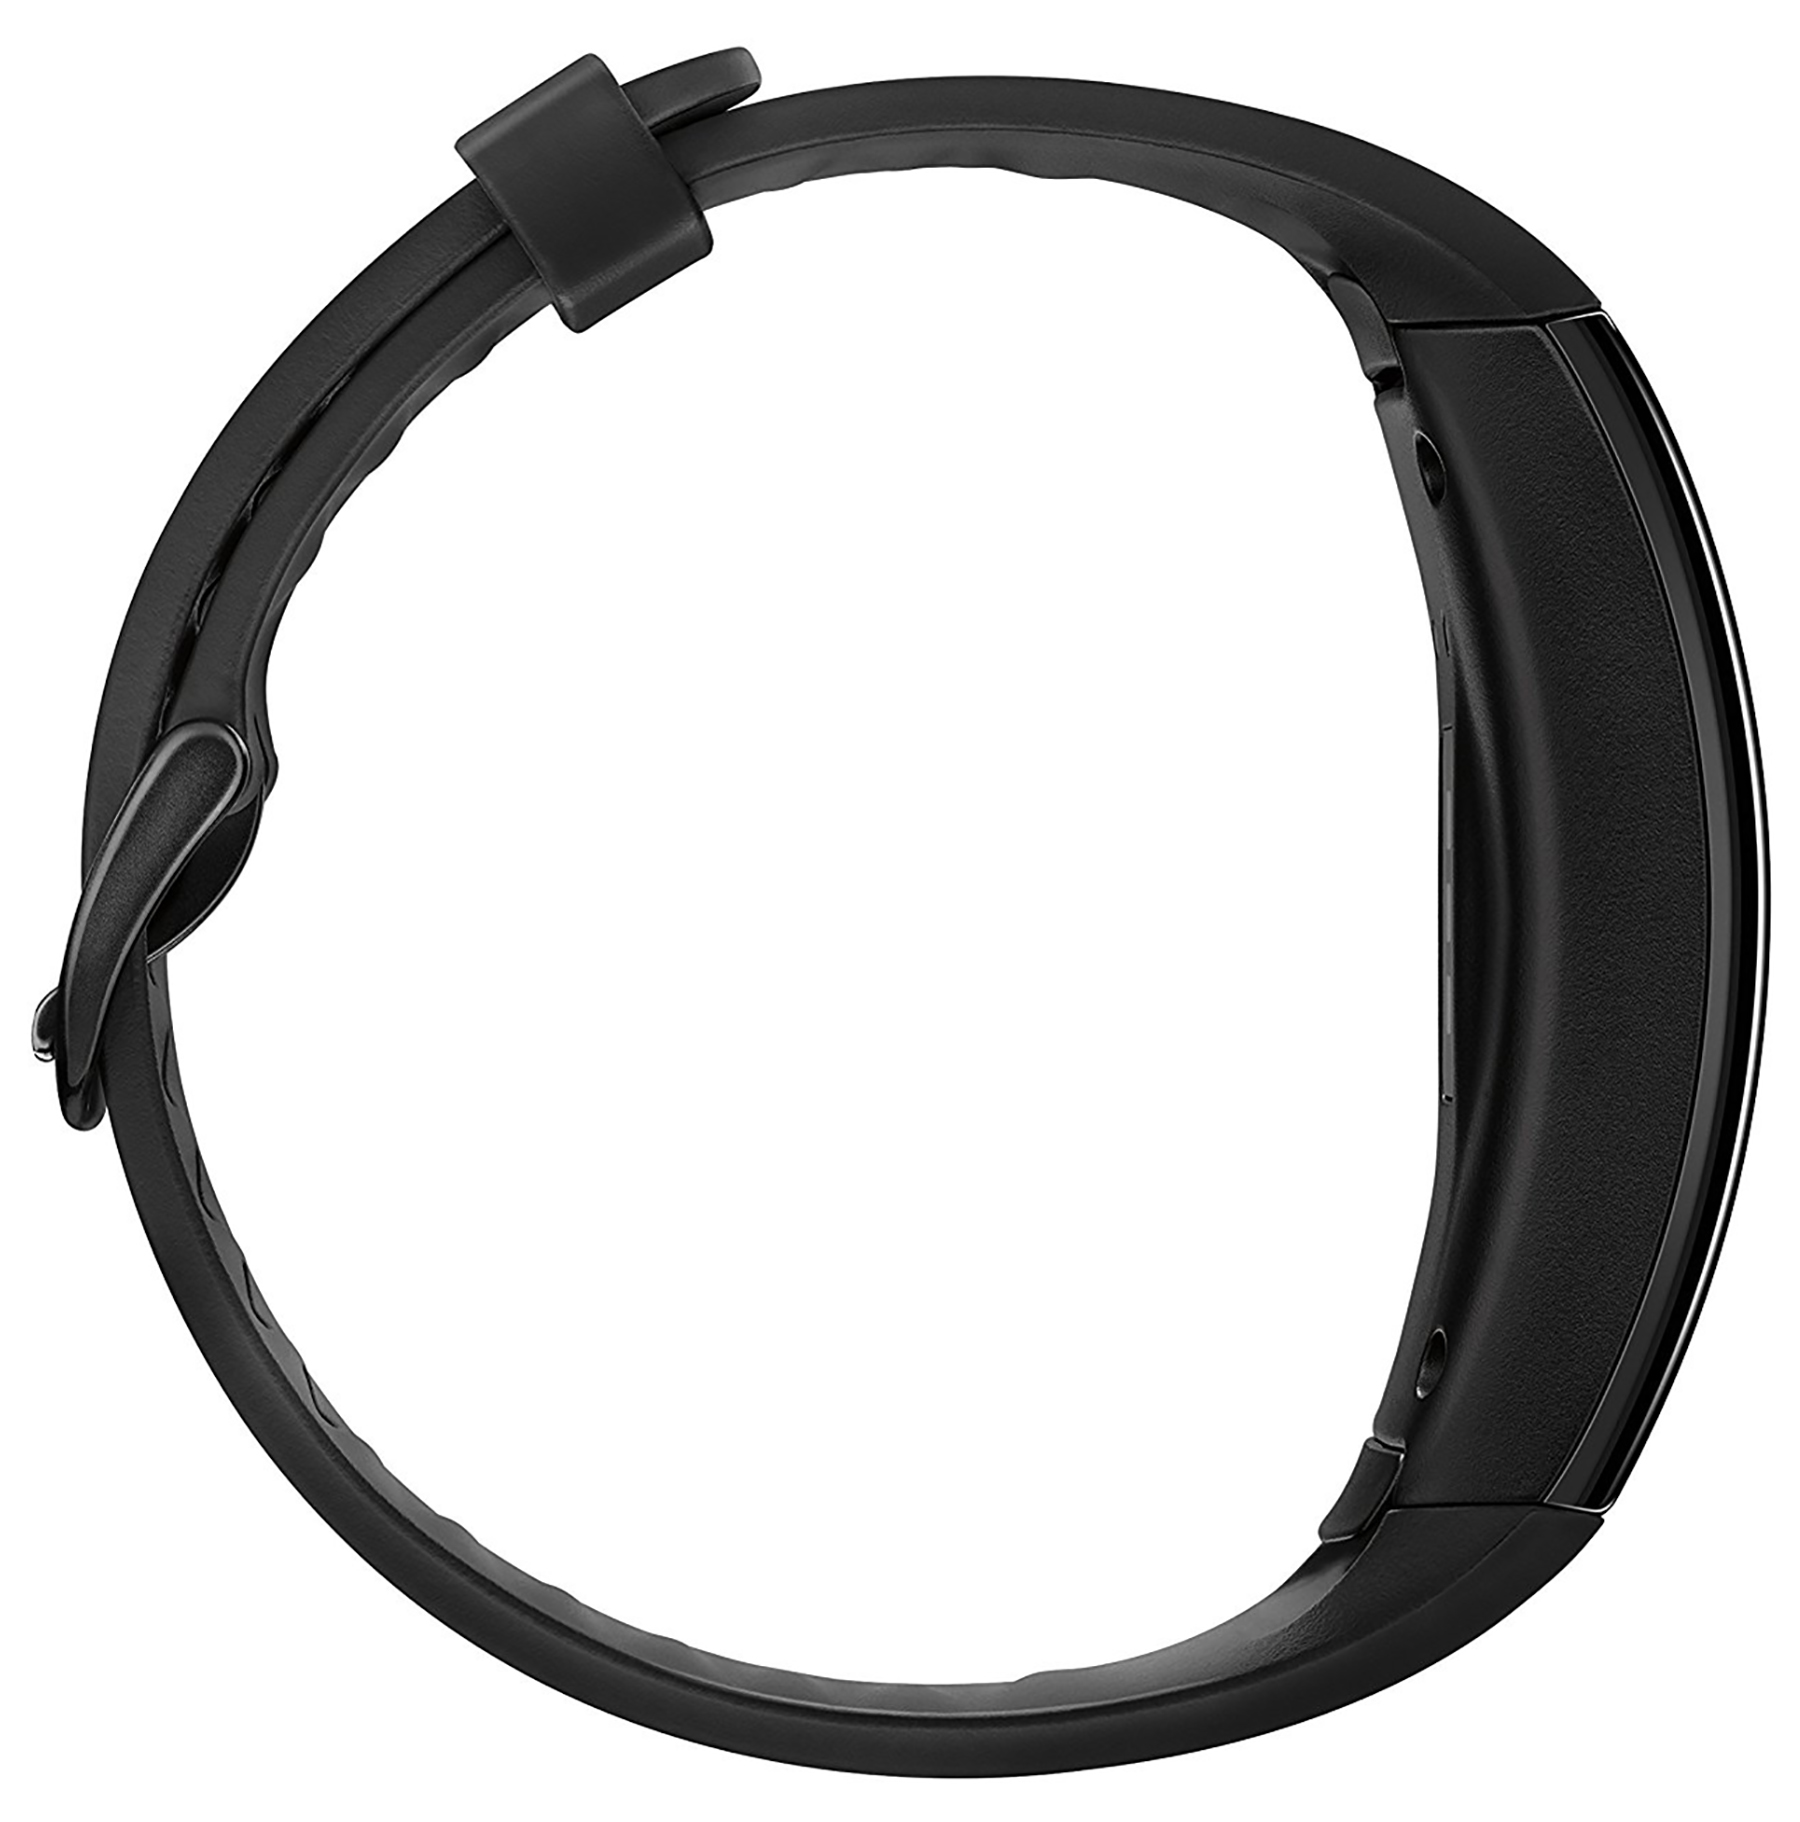 SAMSUNG Gear Fit2 Pro Black Large - SM-R365NZKAXAR - image 5 of 18